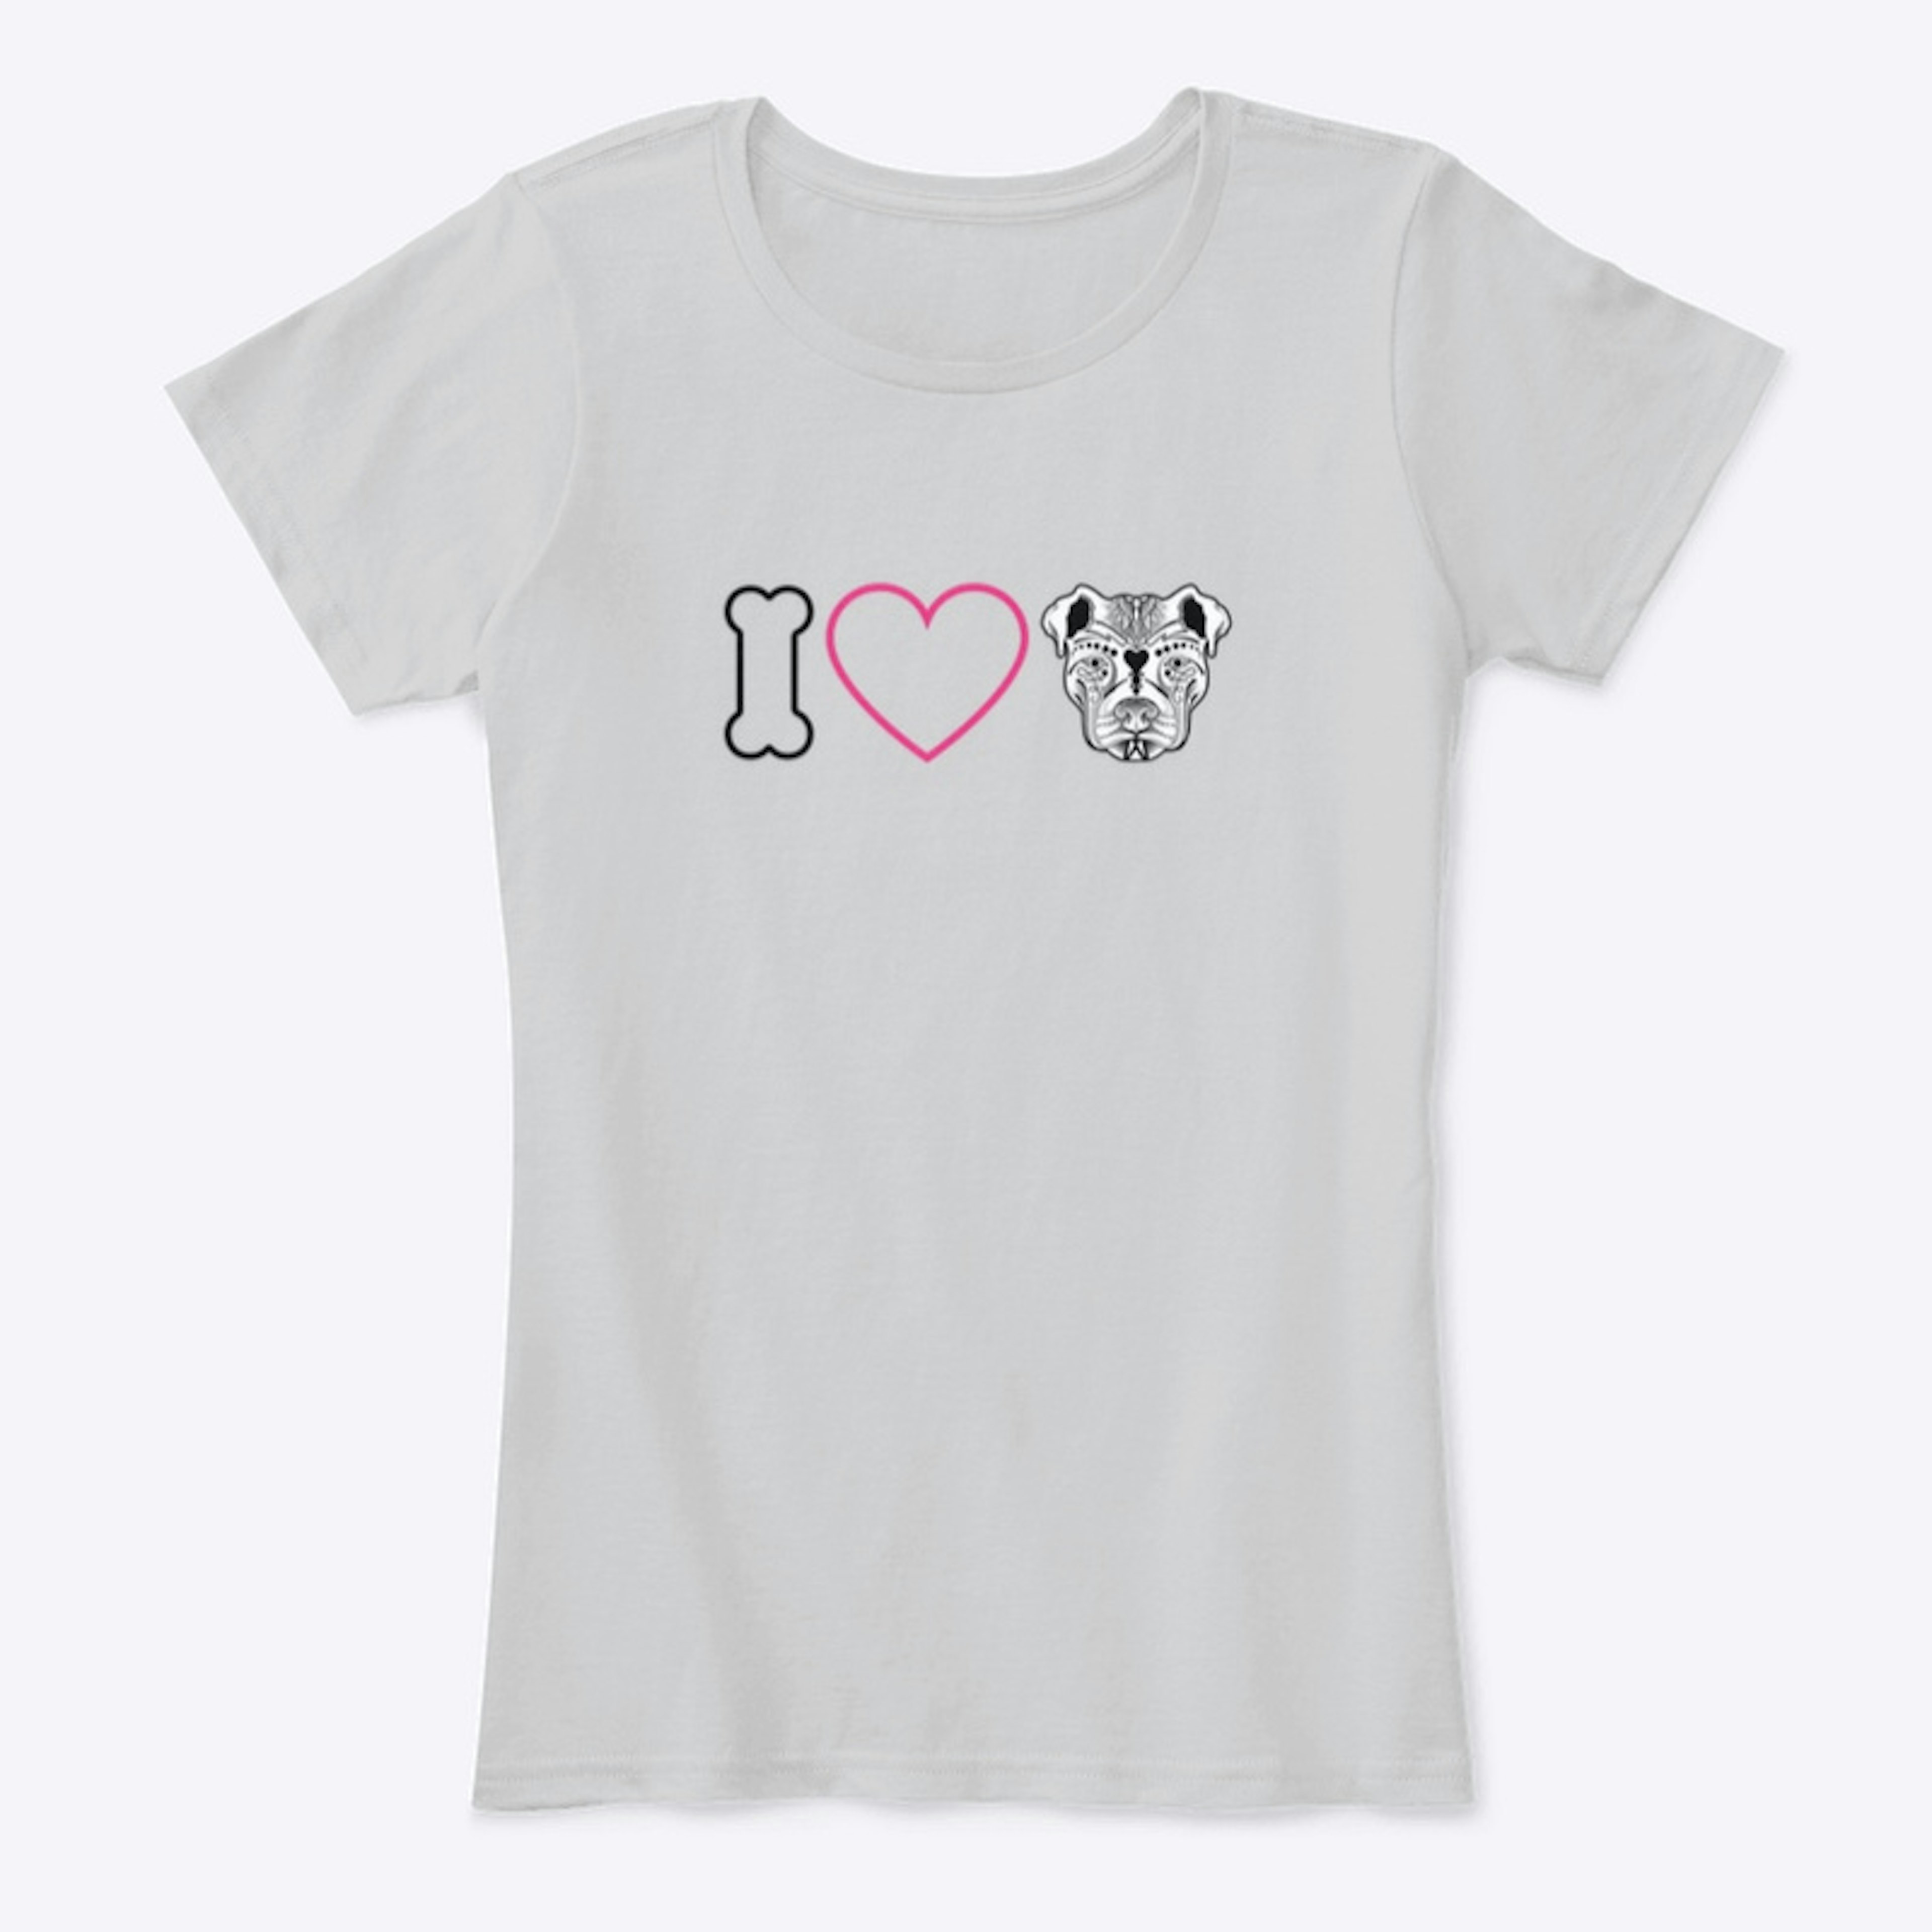 ODHS “I Heart Roxy” T-shirt